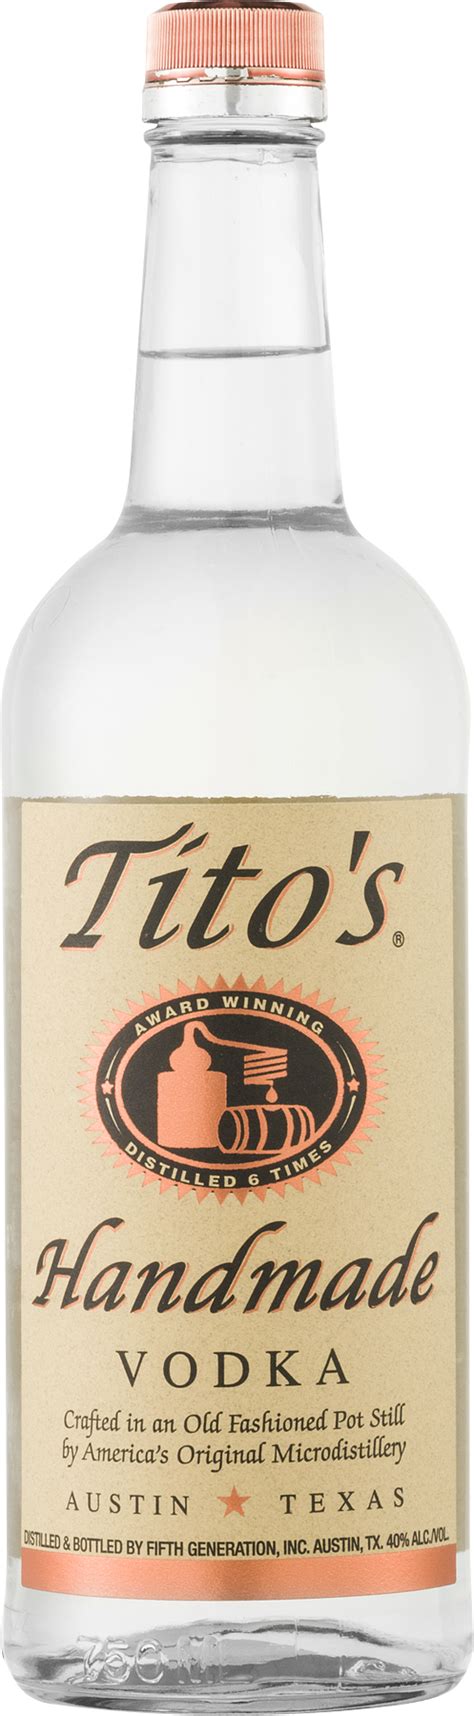 Download Titos Vodka Logo Png Full Size Png Image Pngkit